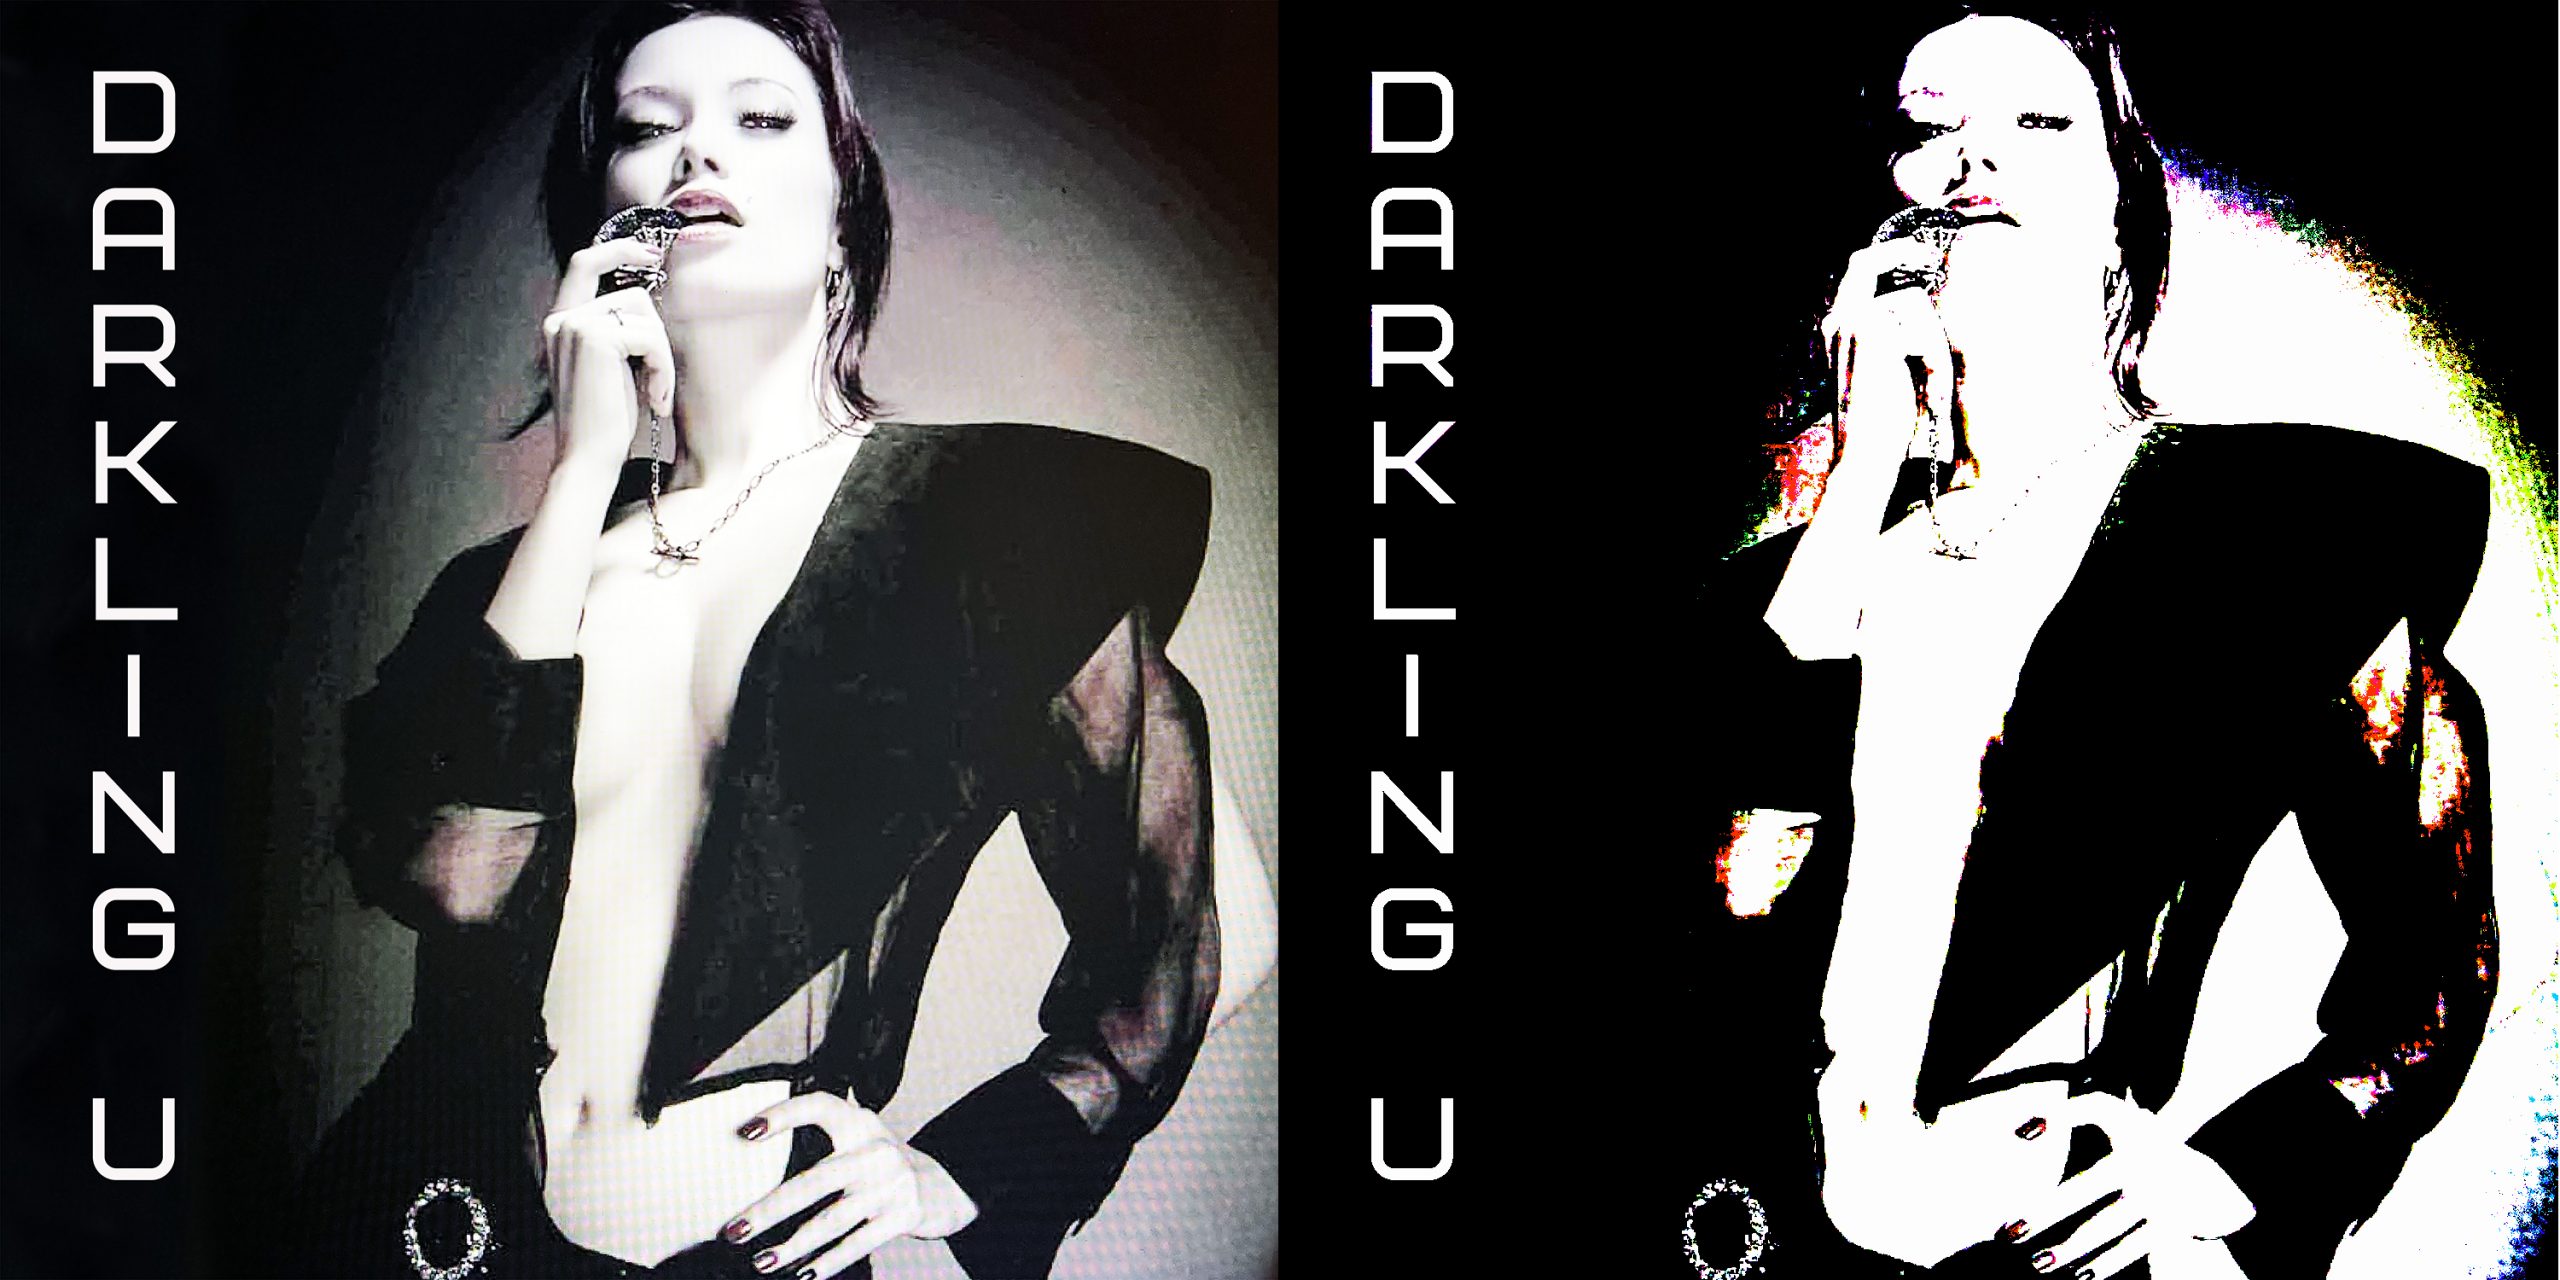 Julian Shah-Tayler's Darkling U reveals an all consuming passion